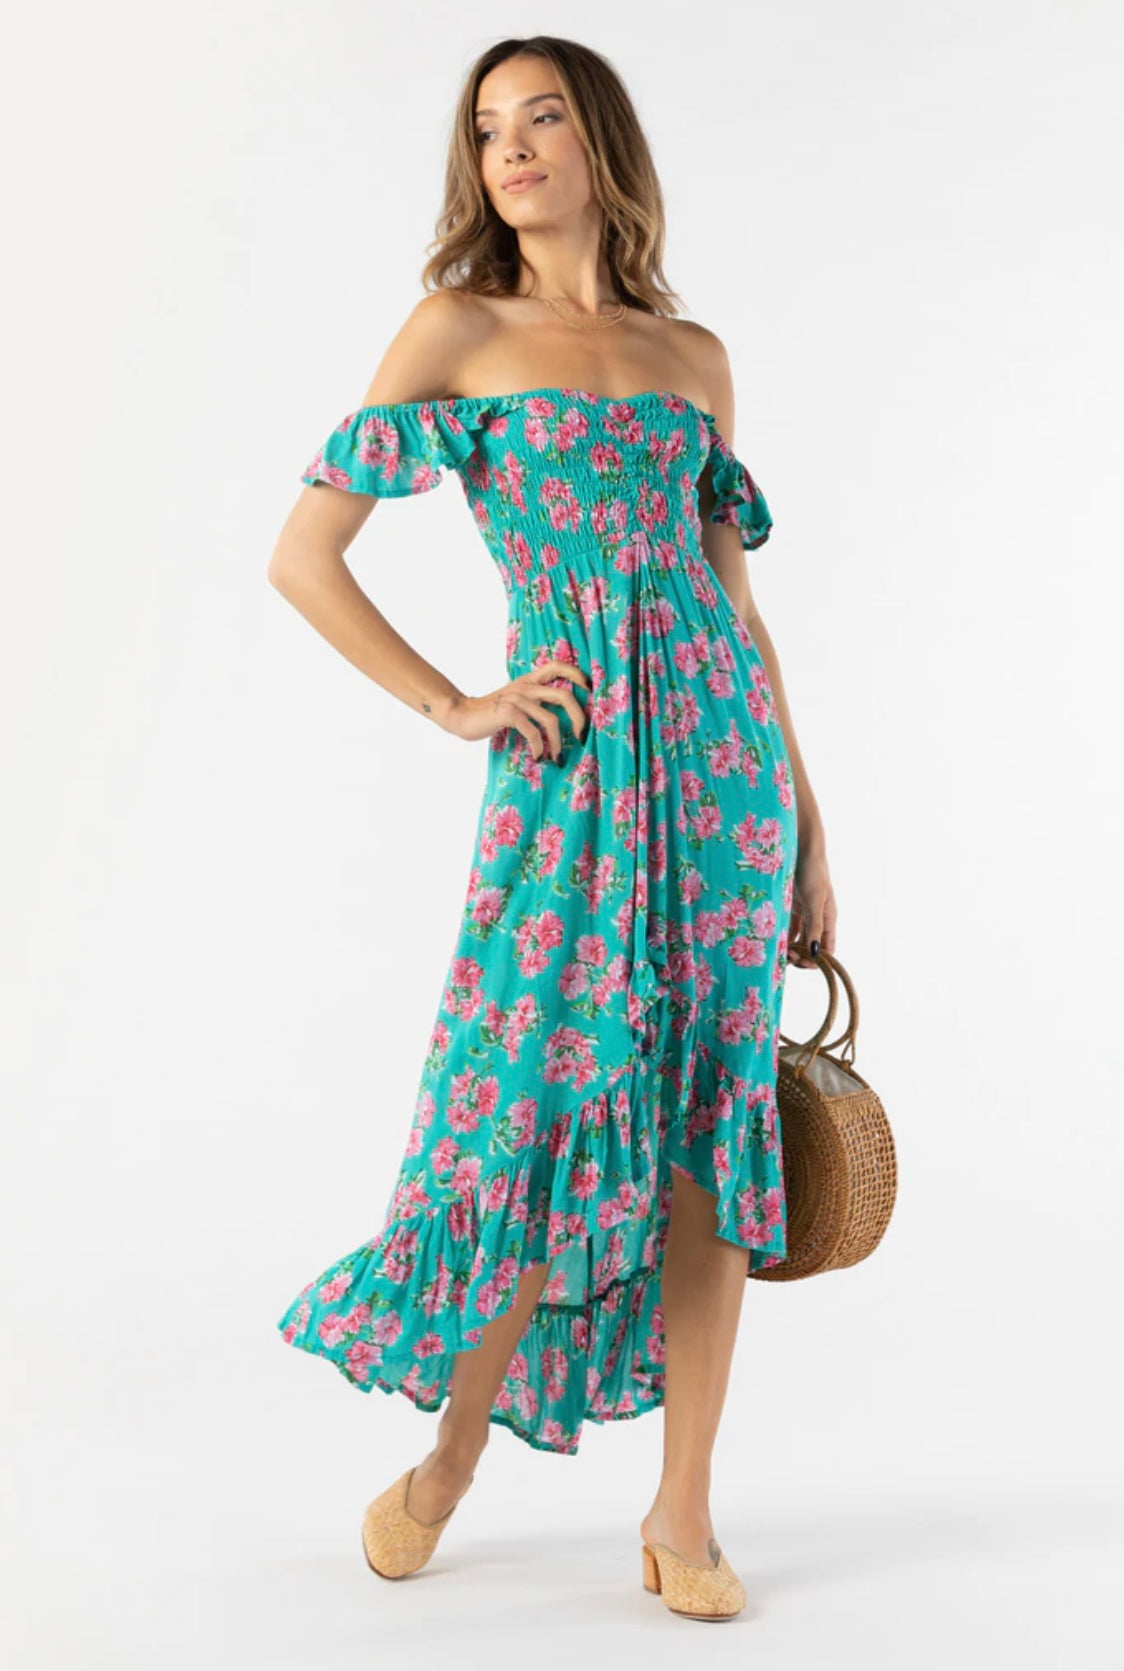 Tiare Hawaii Brooklyn Maxi Dress | Hibiscus Bouquet Teal